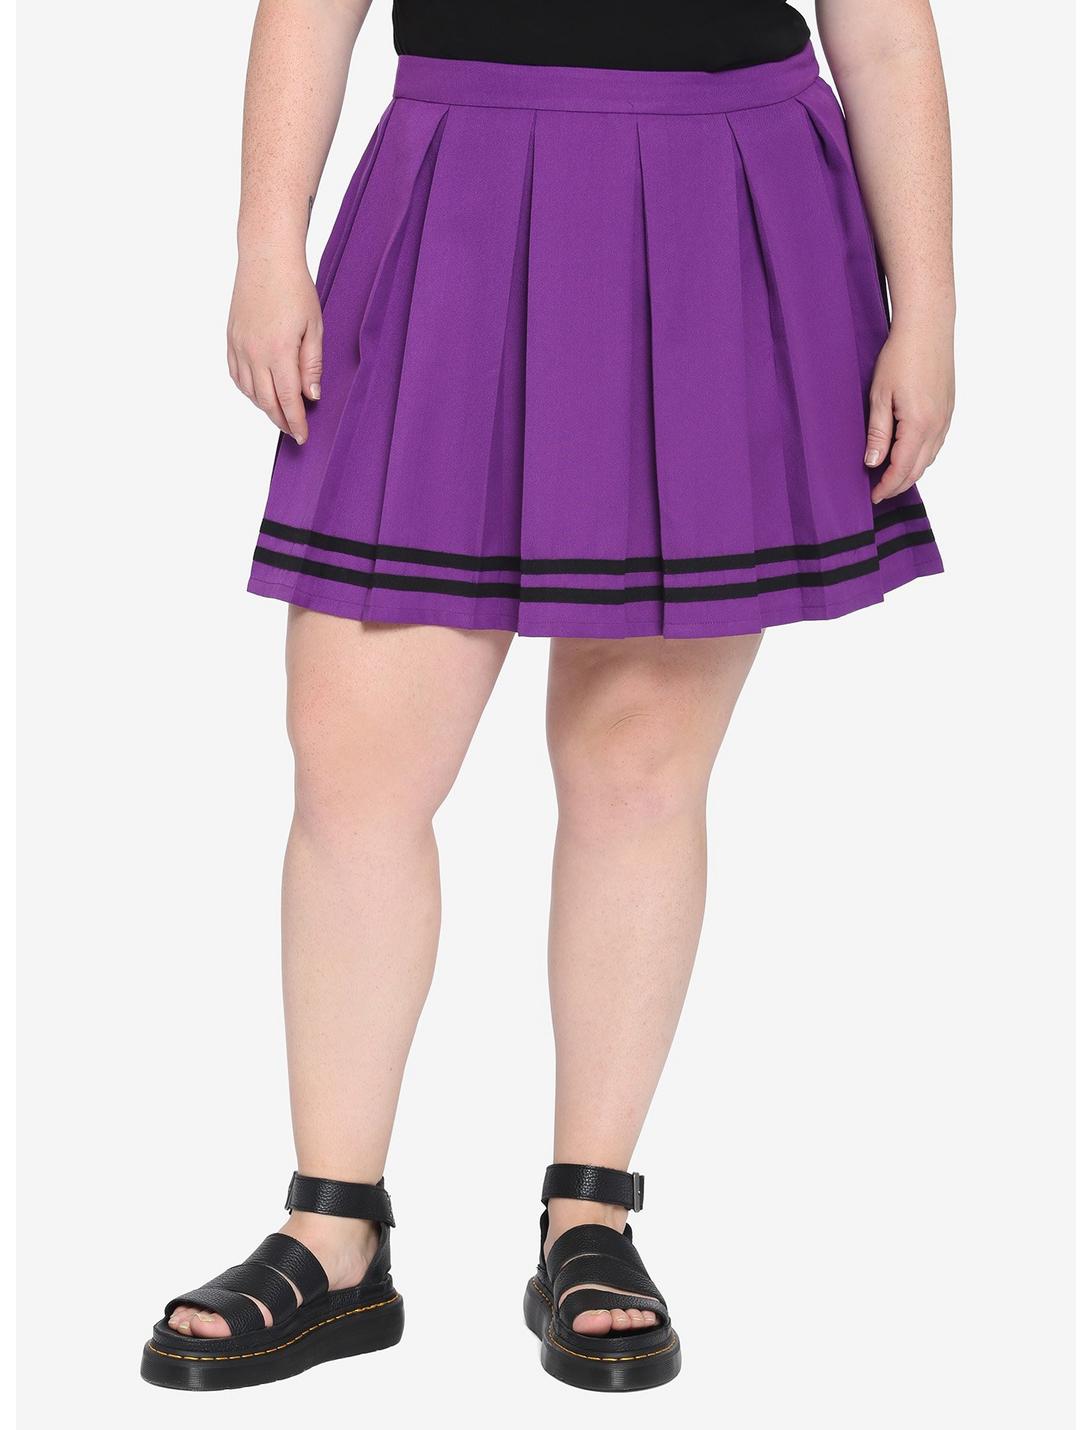 Purple & Black Cheer Skirt Plus Size, PURPLE, hi-res